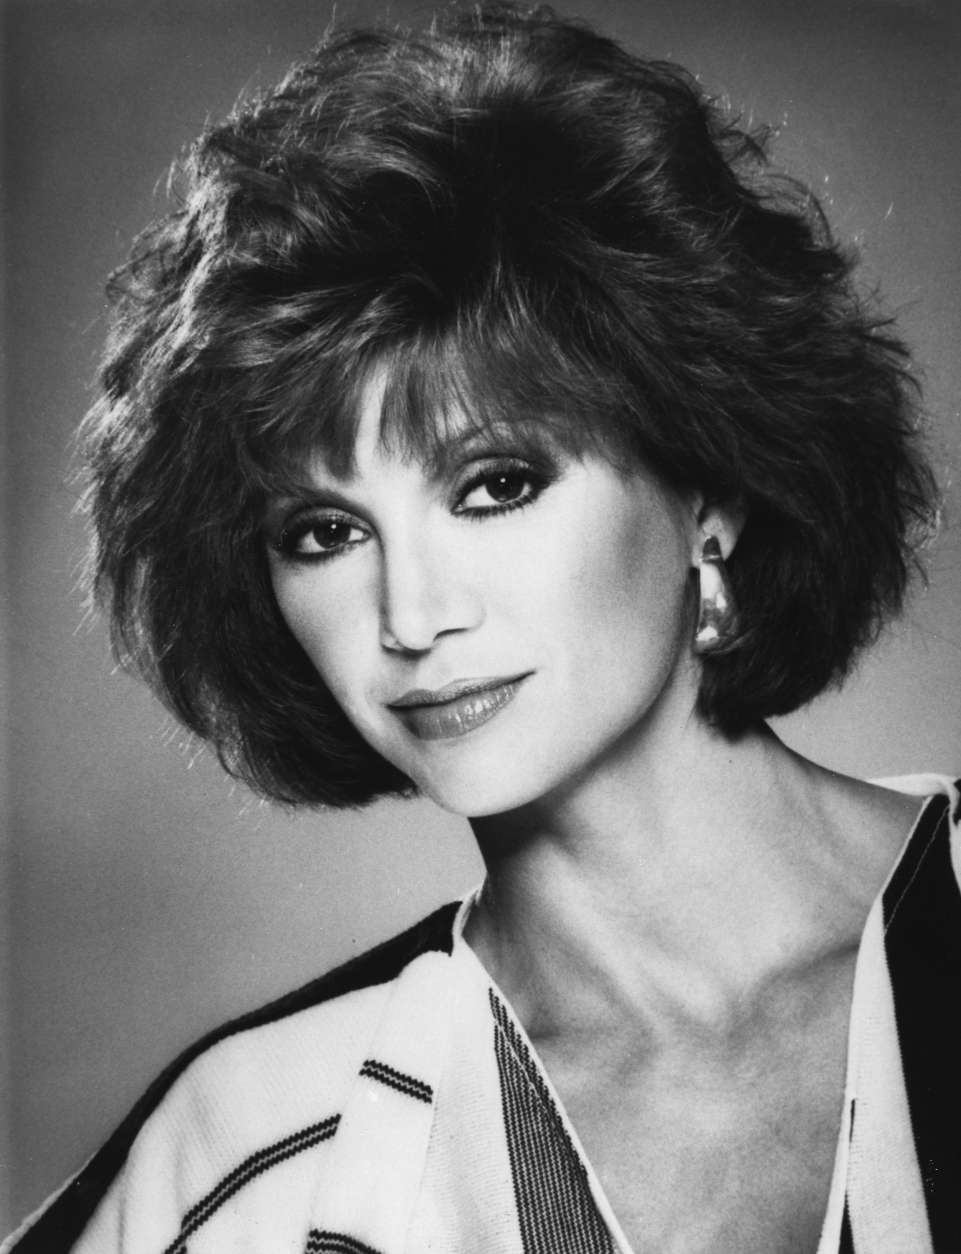 1985 portrait of "Dallas" star U.S. American actress Victoria Principal. (AP Photo/Ho)